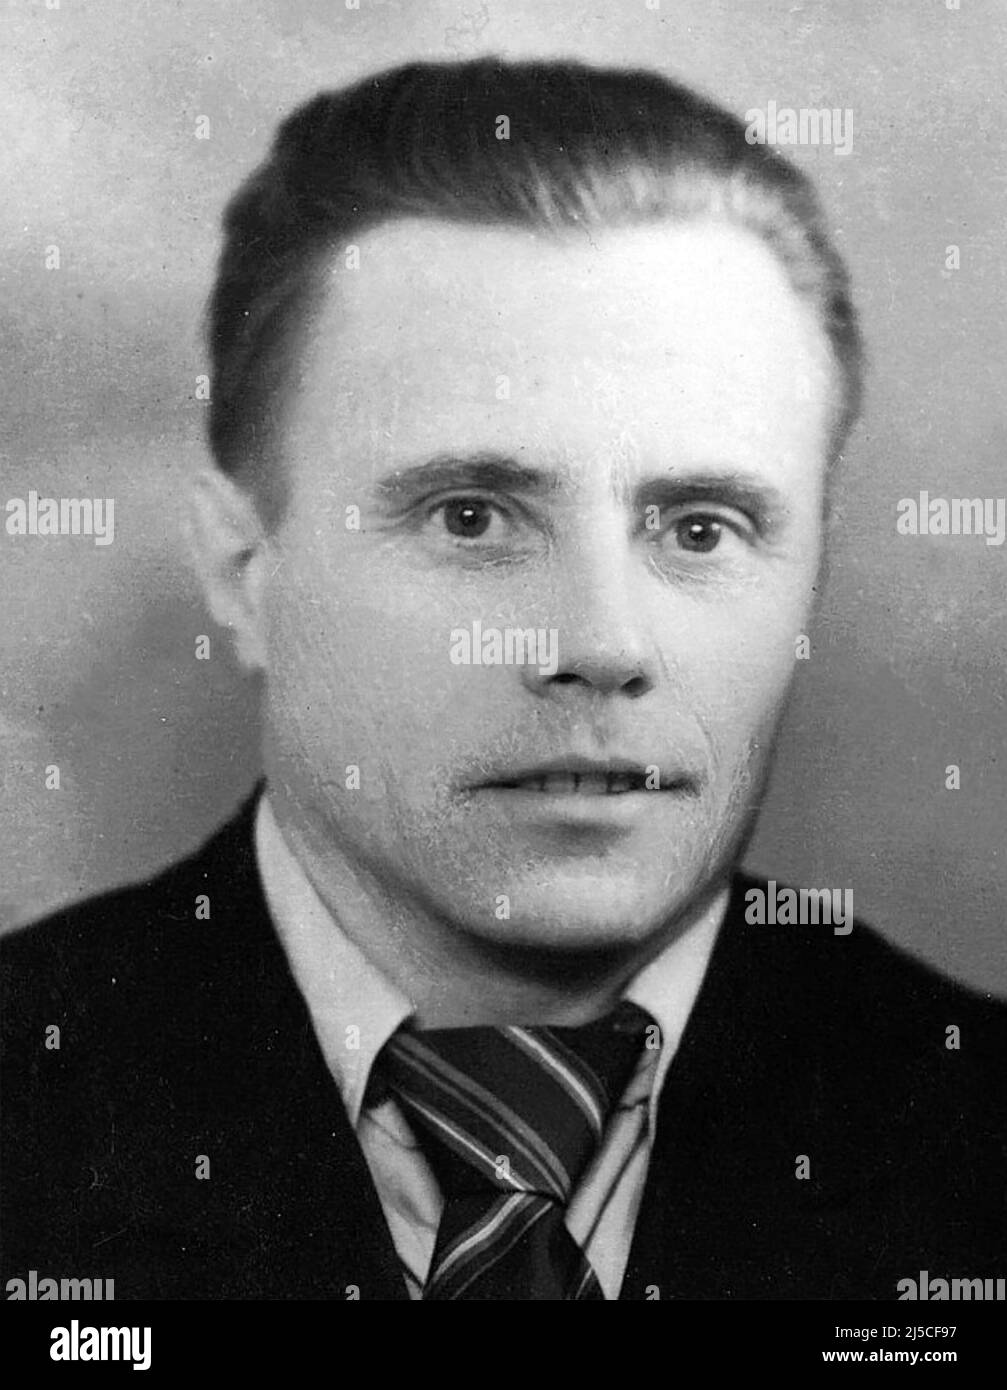 VLADIMIR SPIRIDONOVICH PUTIN, father of Vladimir Putin Stock Photo